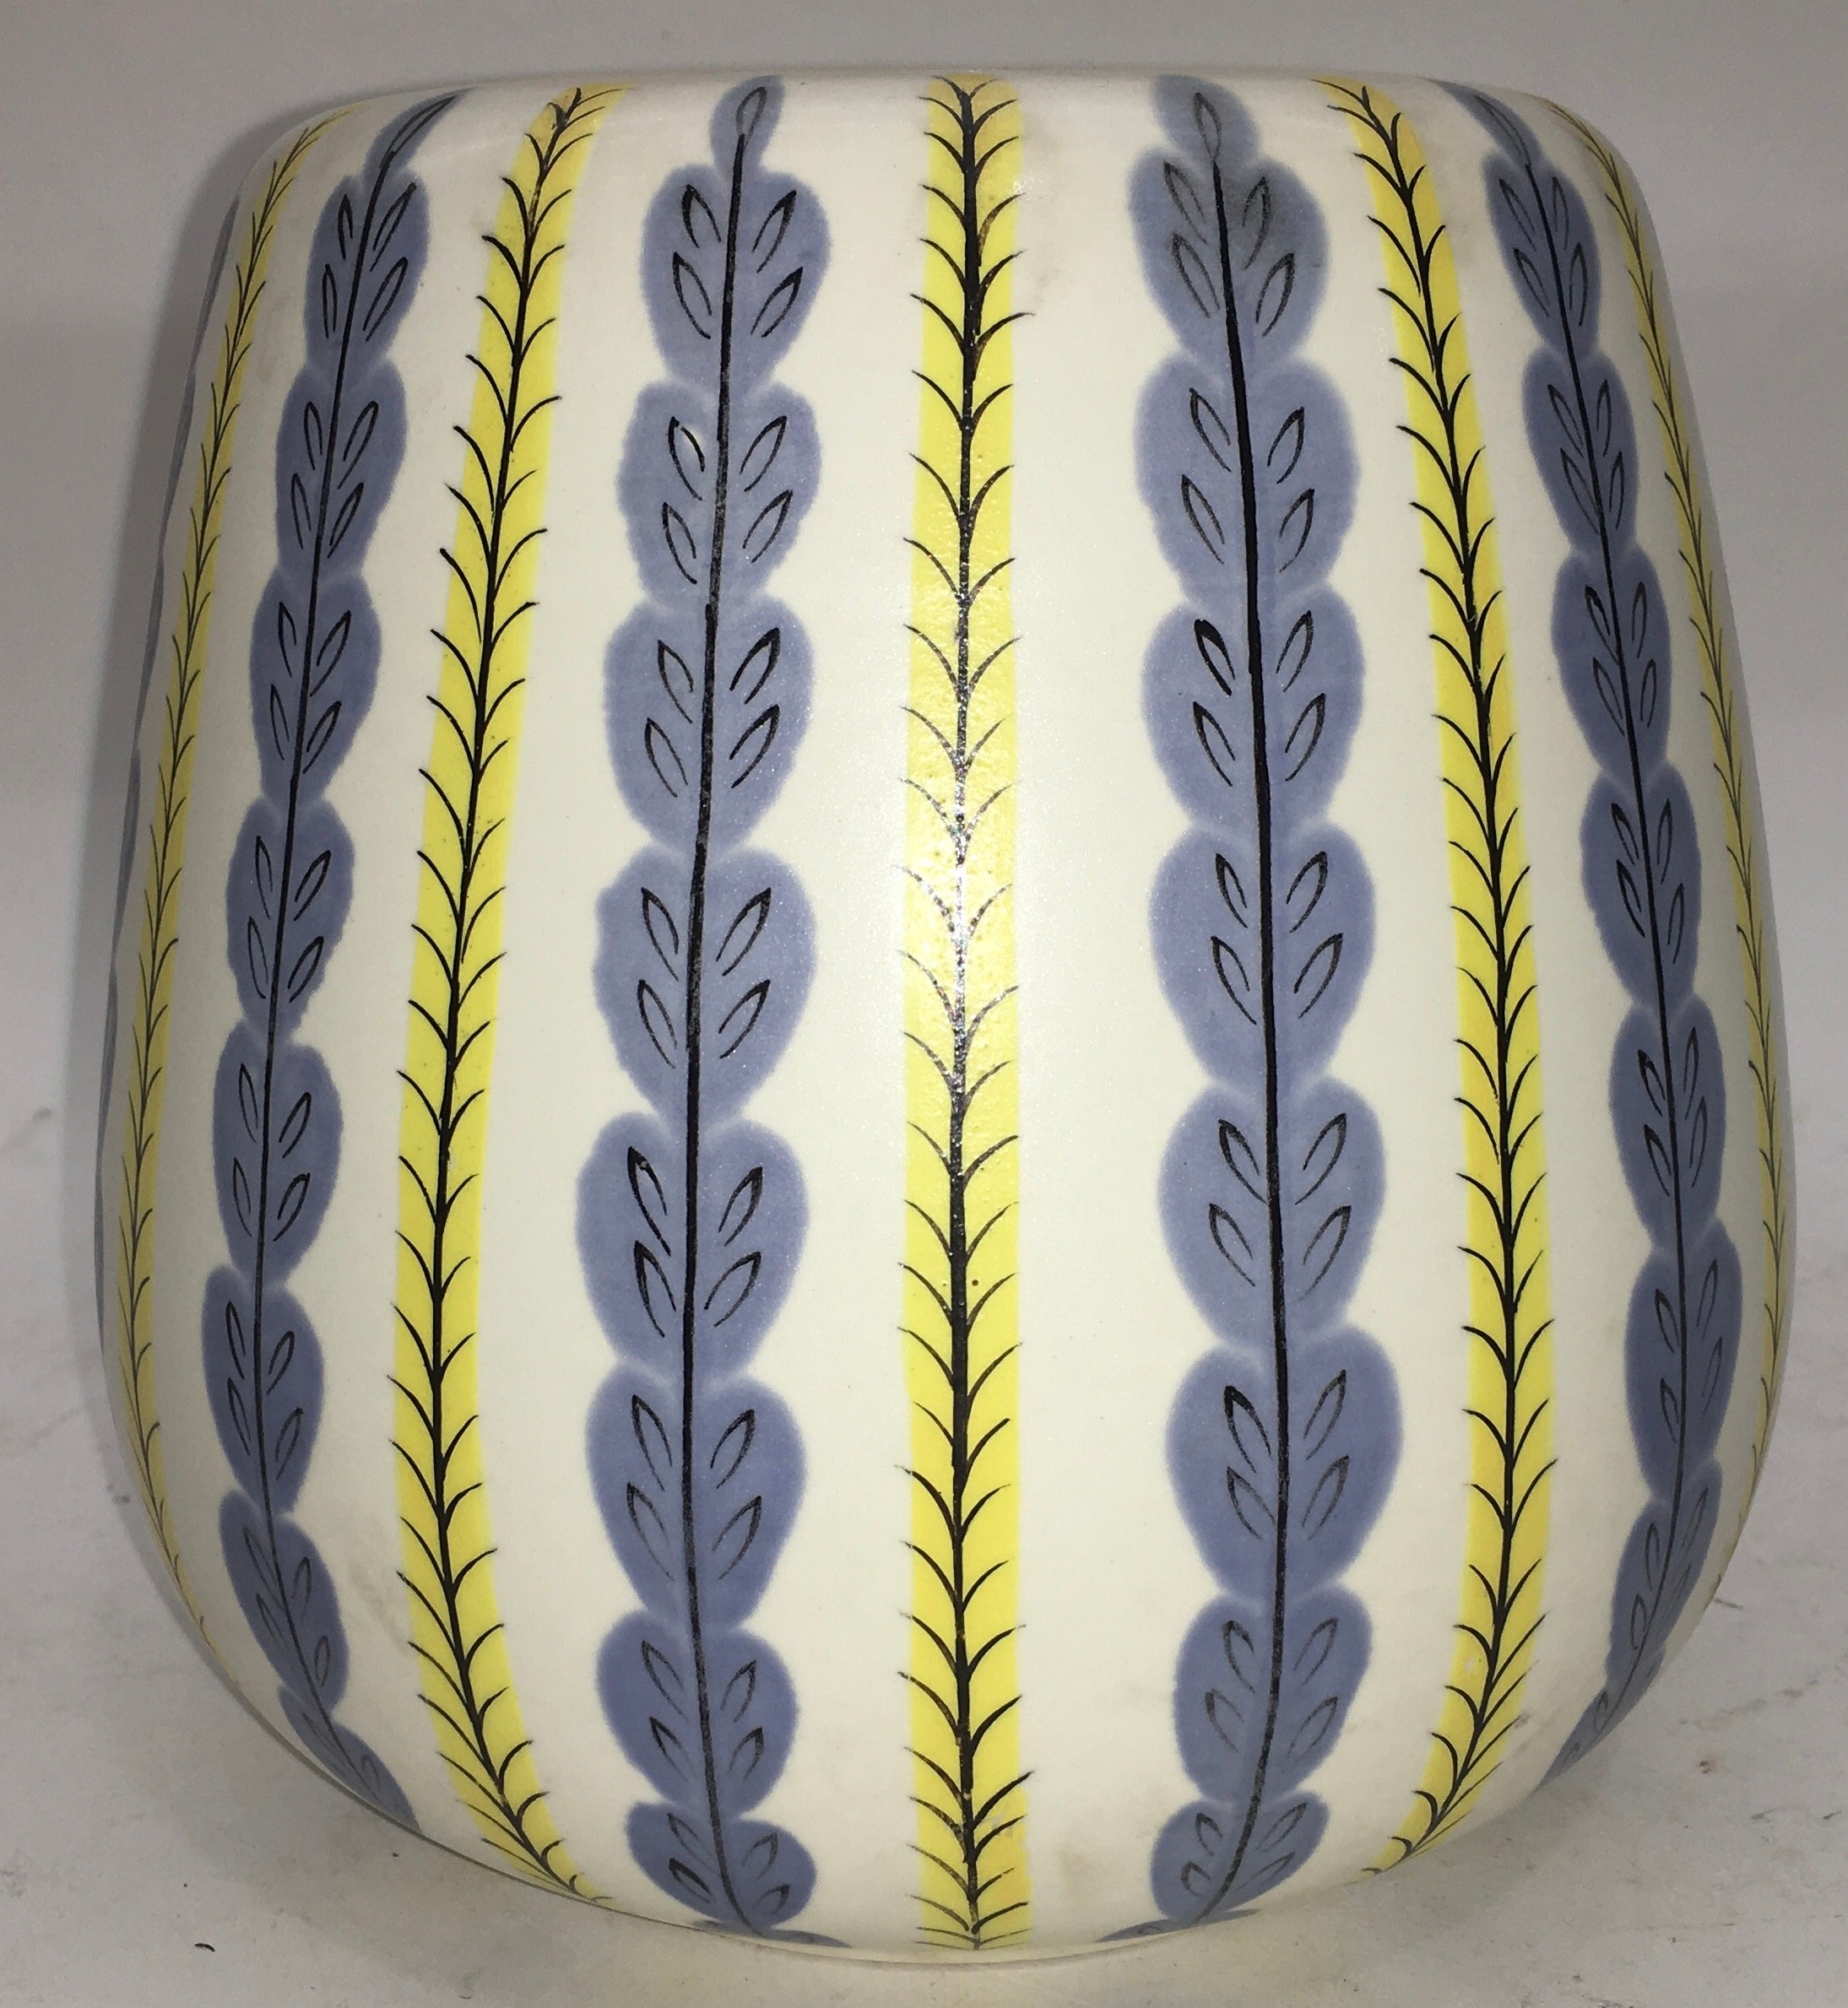 Poole Pottery Freeform shape 687 YCS pattern vase by Sylvia Davis 6.8" high x 6.3" wide, fully